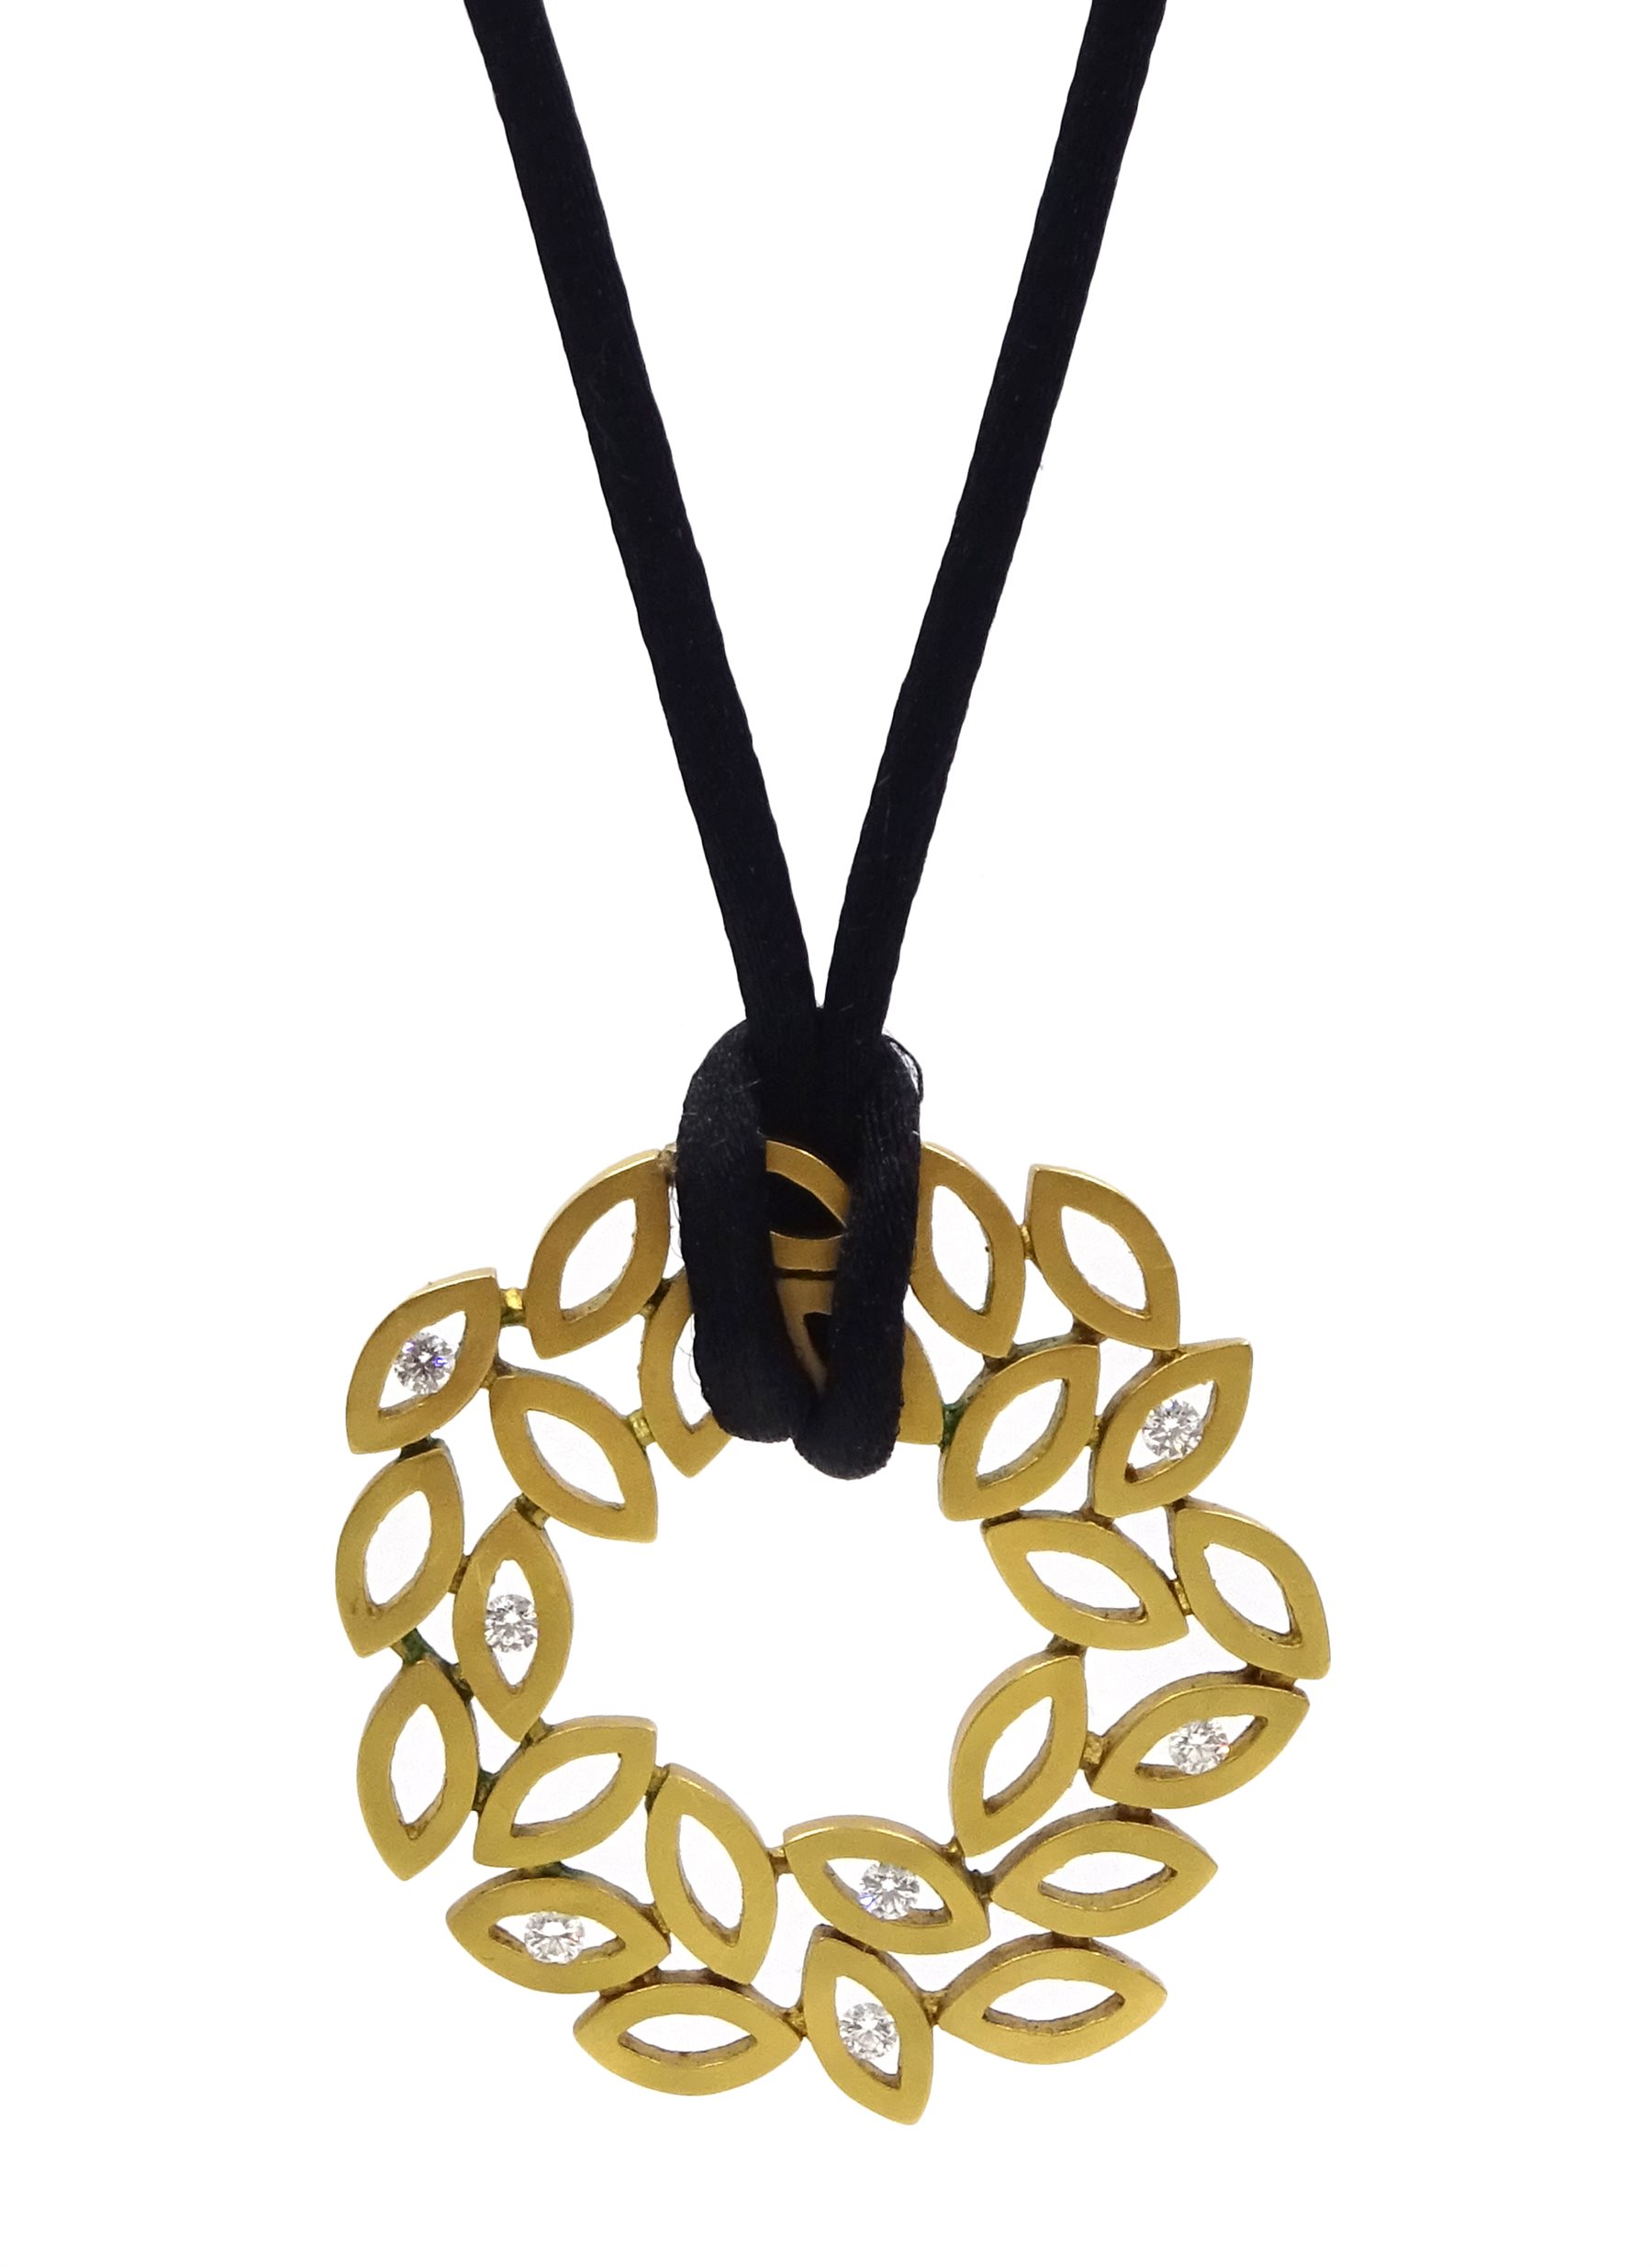 Greek 18ct gold pendant, stylised laurel leaf design set with seven round brilliant cut diamonds, o